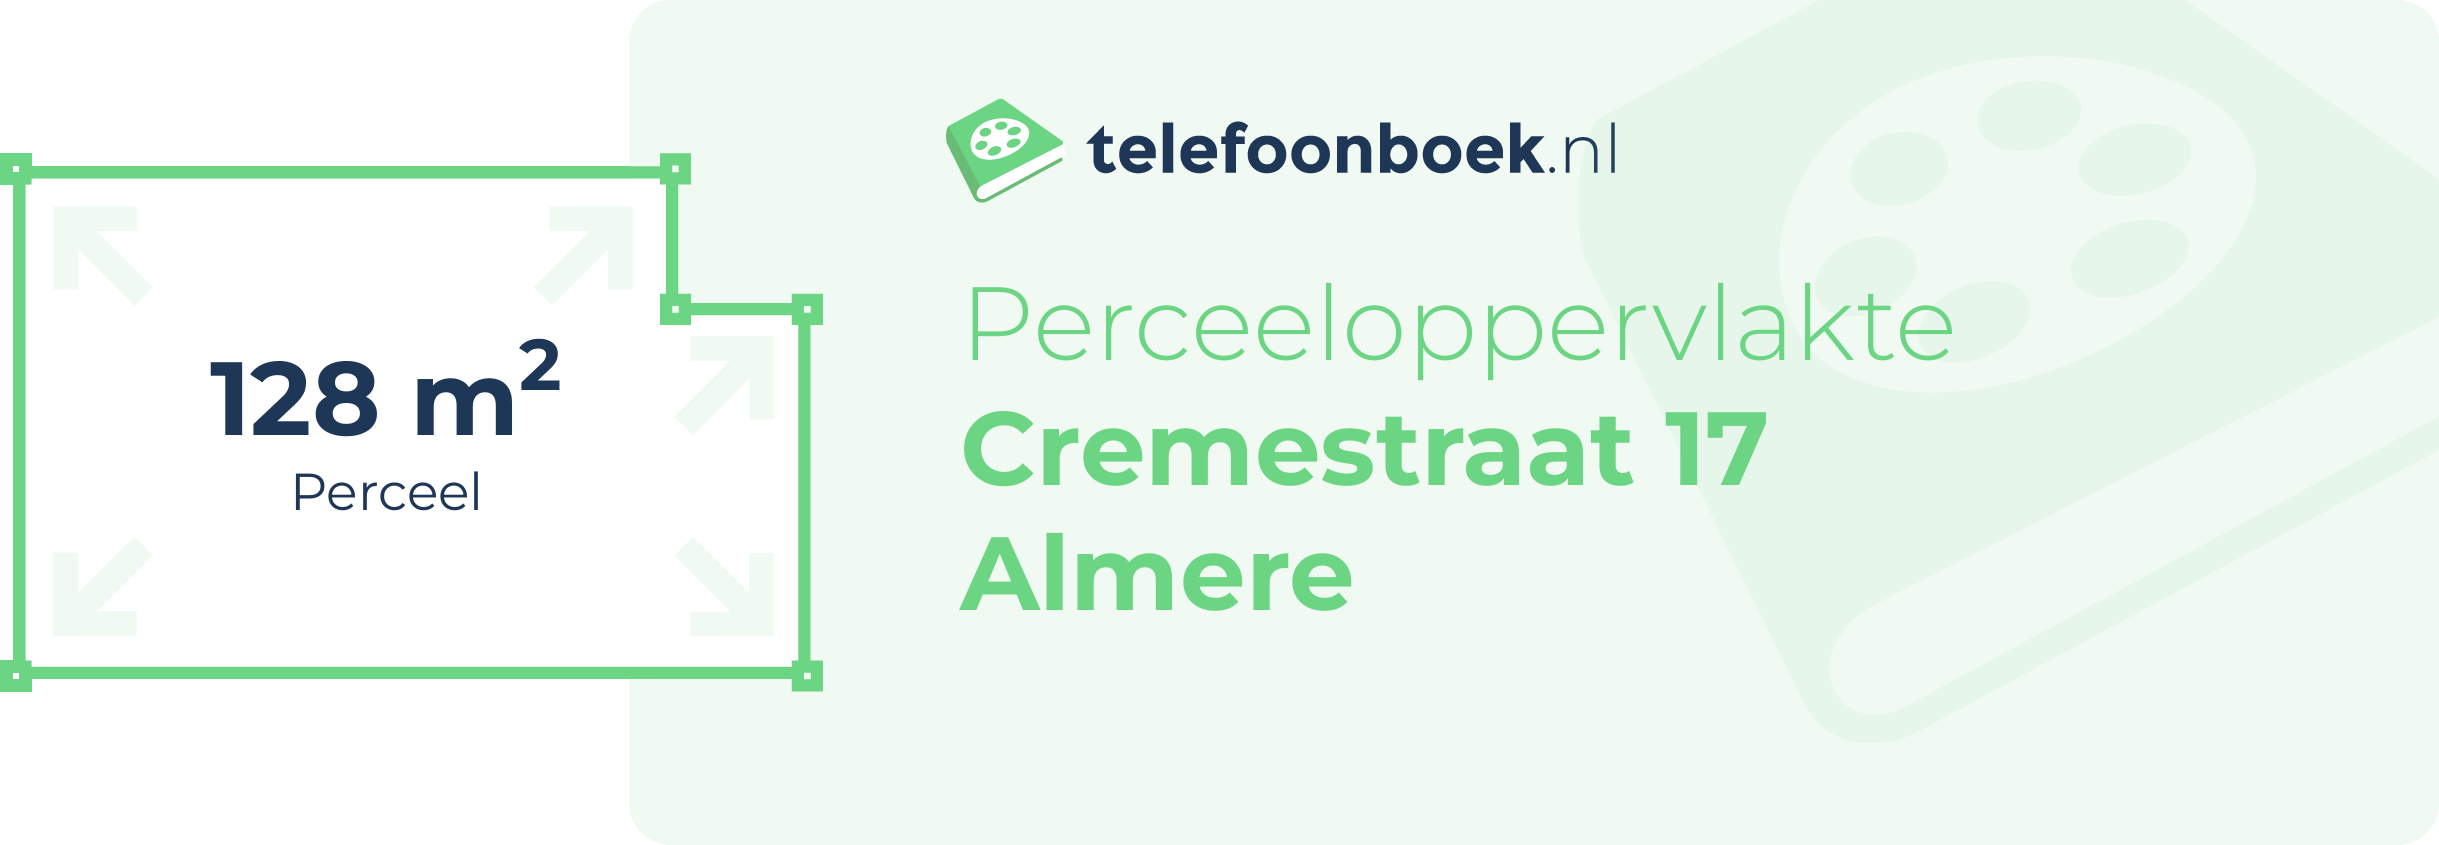 Perceeloppervlakte Cremestraat 17 Almere